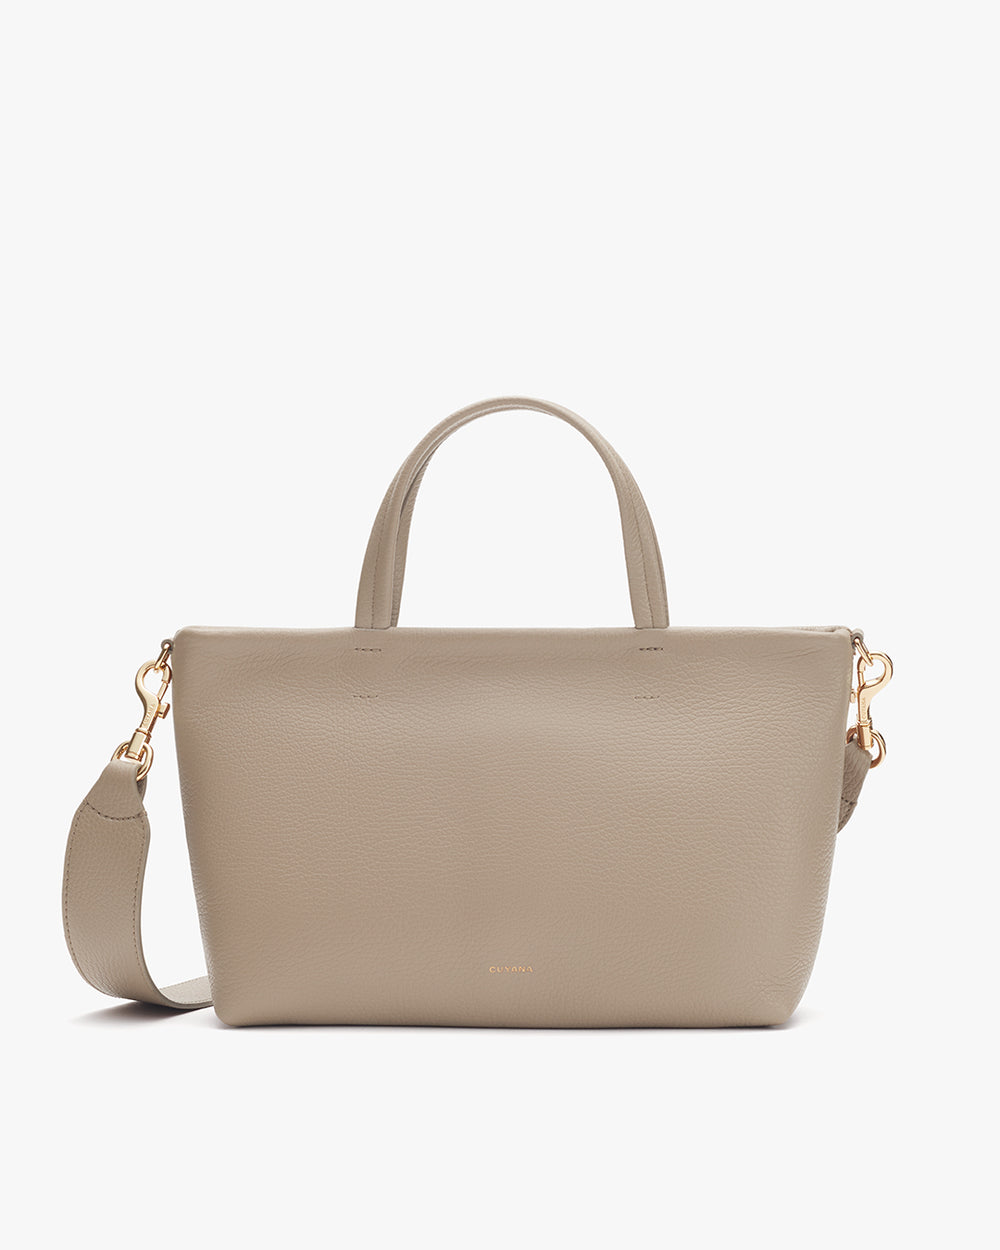 Handbag with top handles and a detachable shoulder strap.